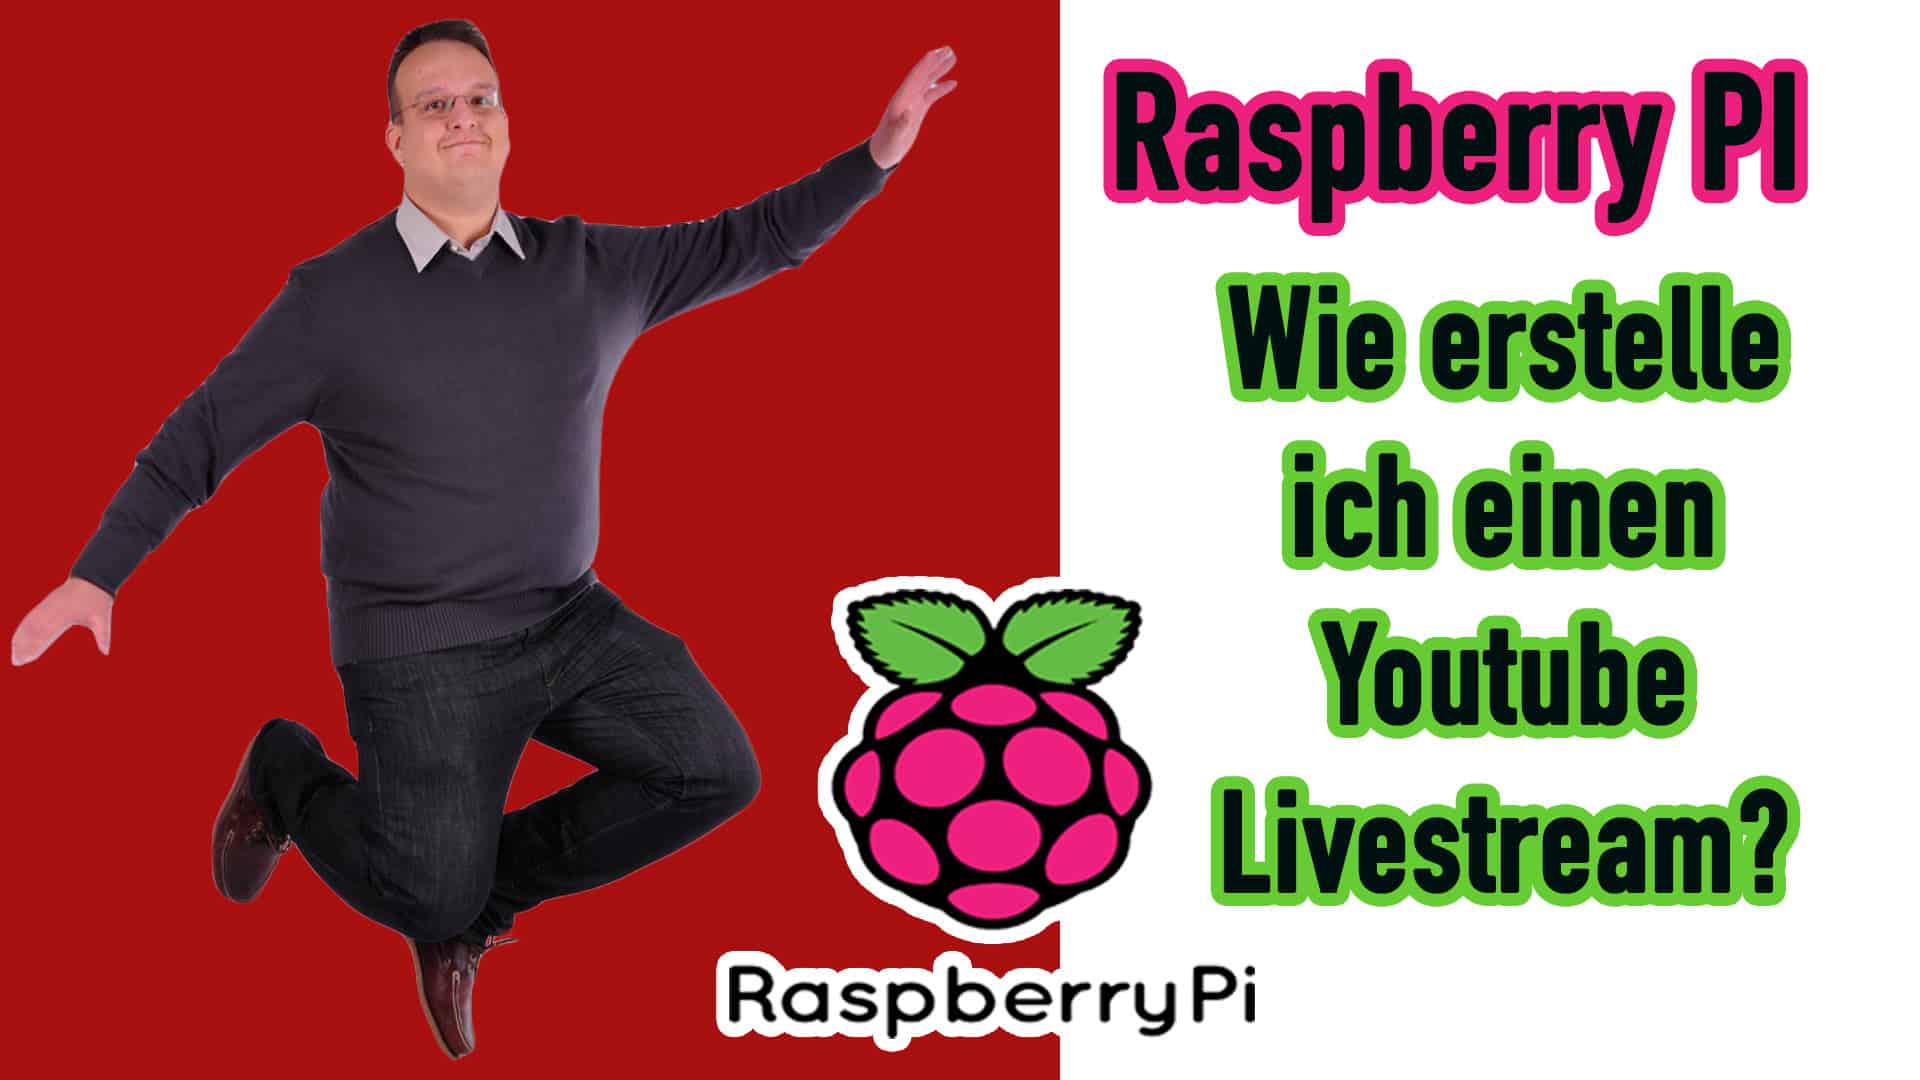 Youtube Livestream mit dem Raspberry Pi machen